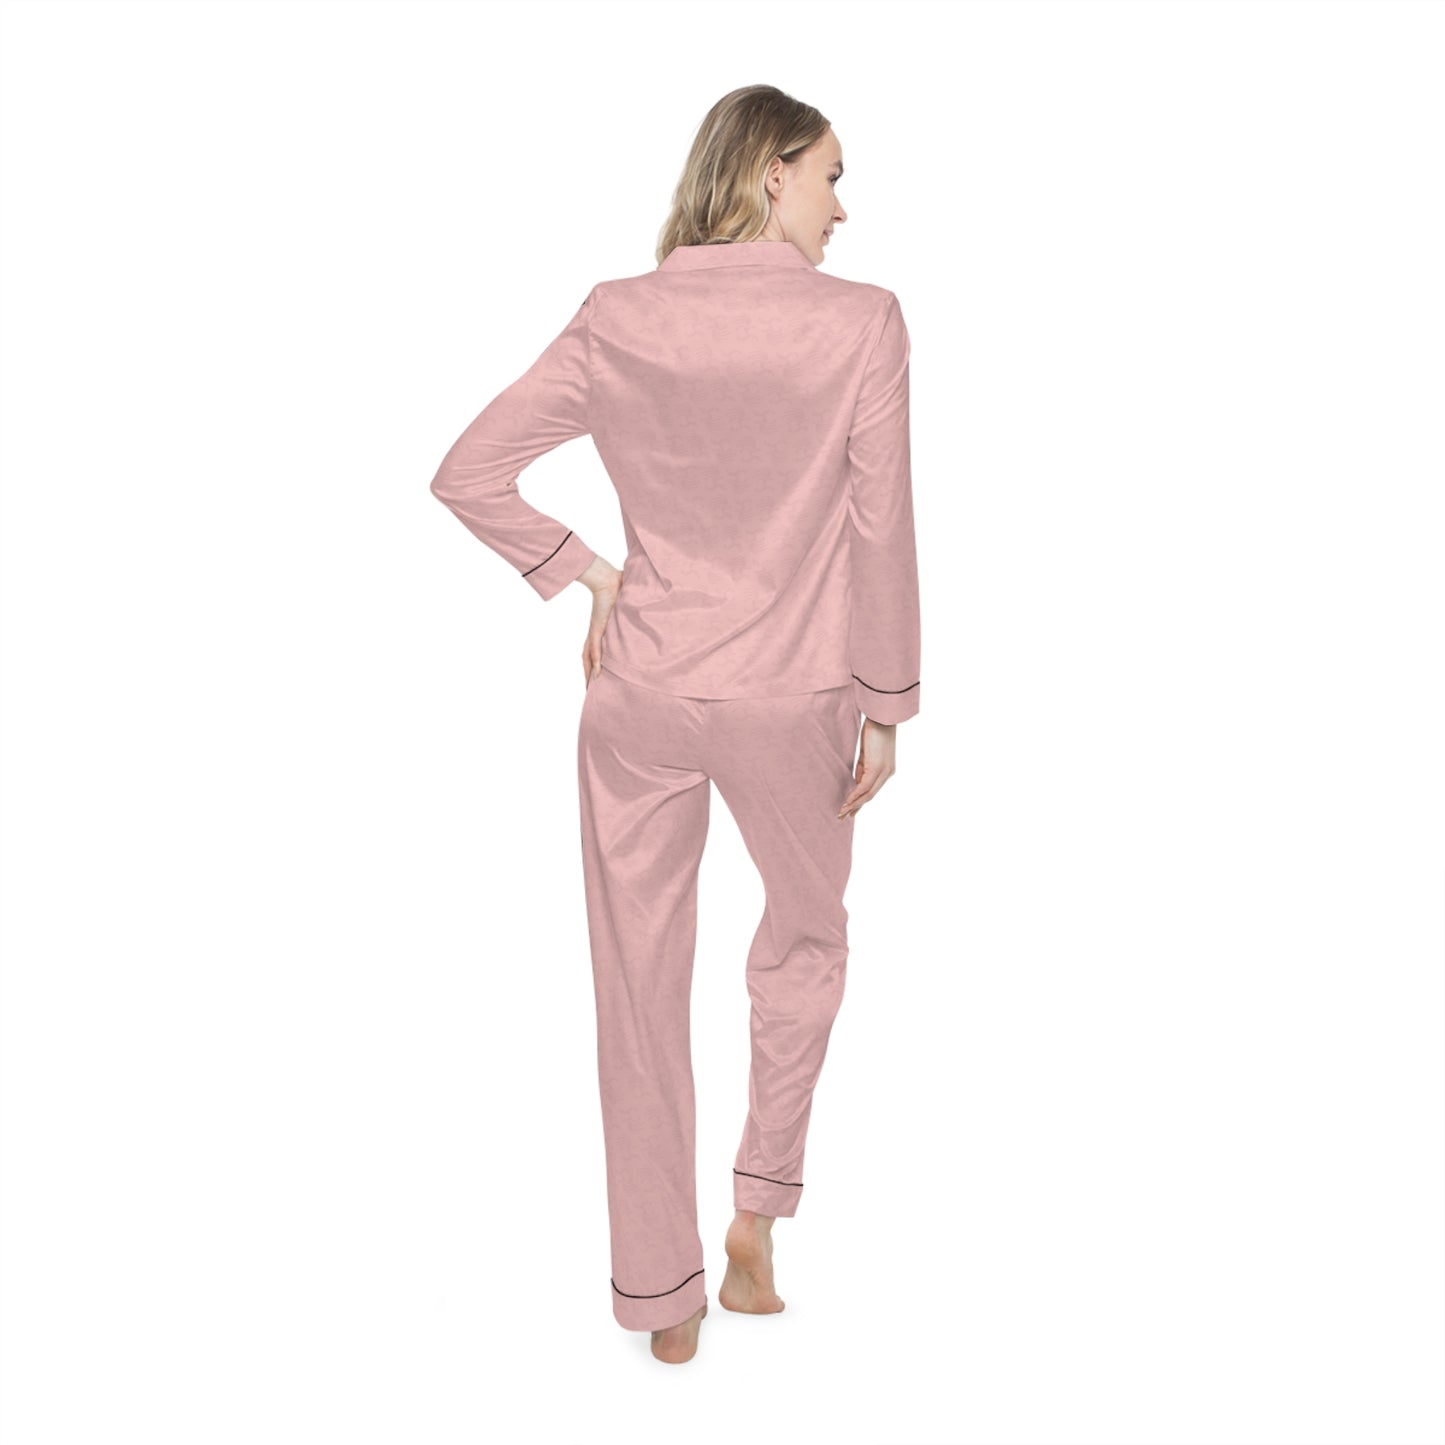 "Surf Club Tortola" Women's Satin Pajamas (Pink)